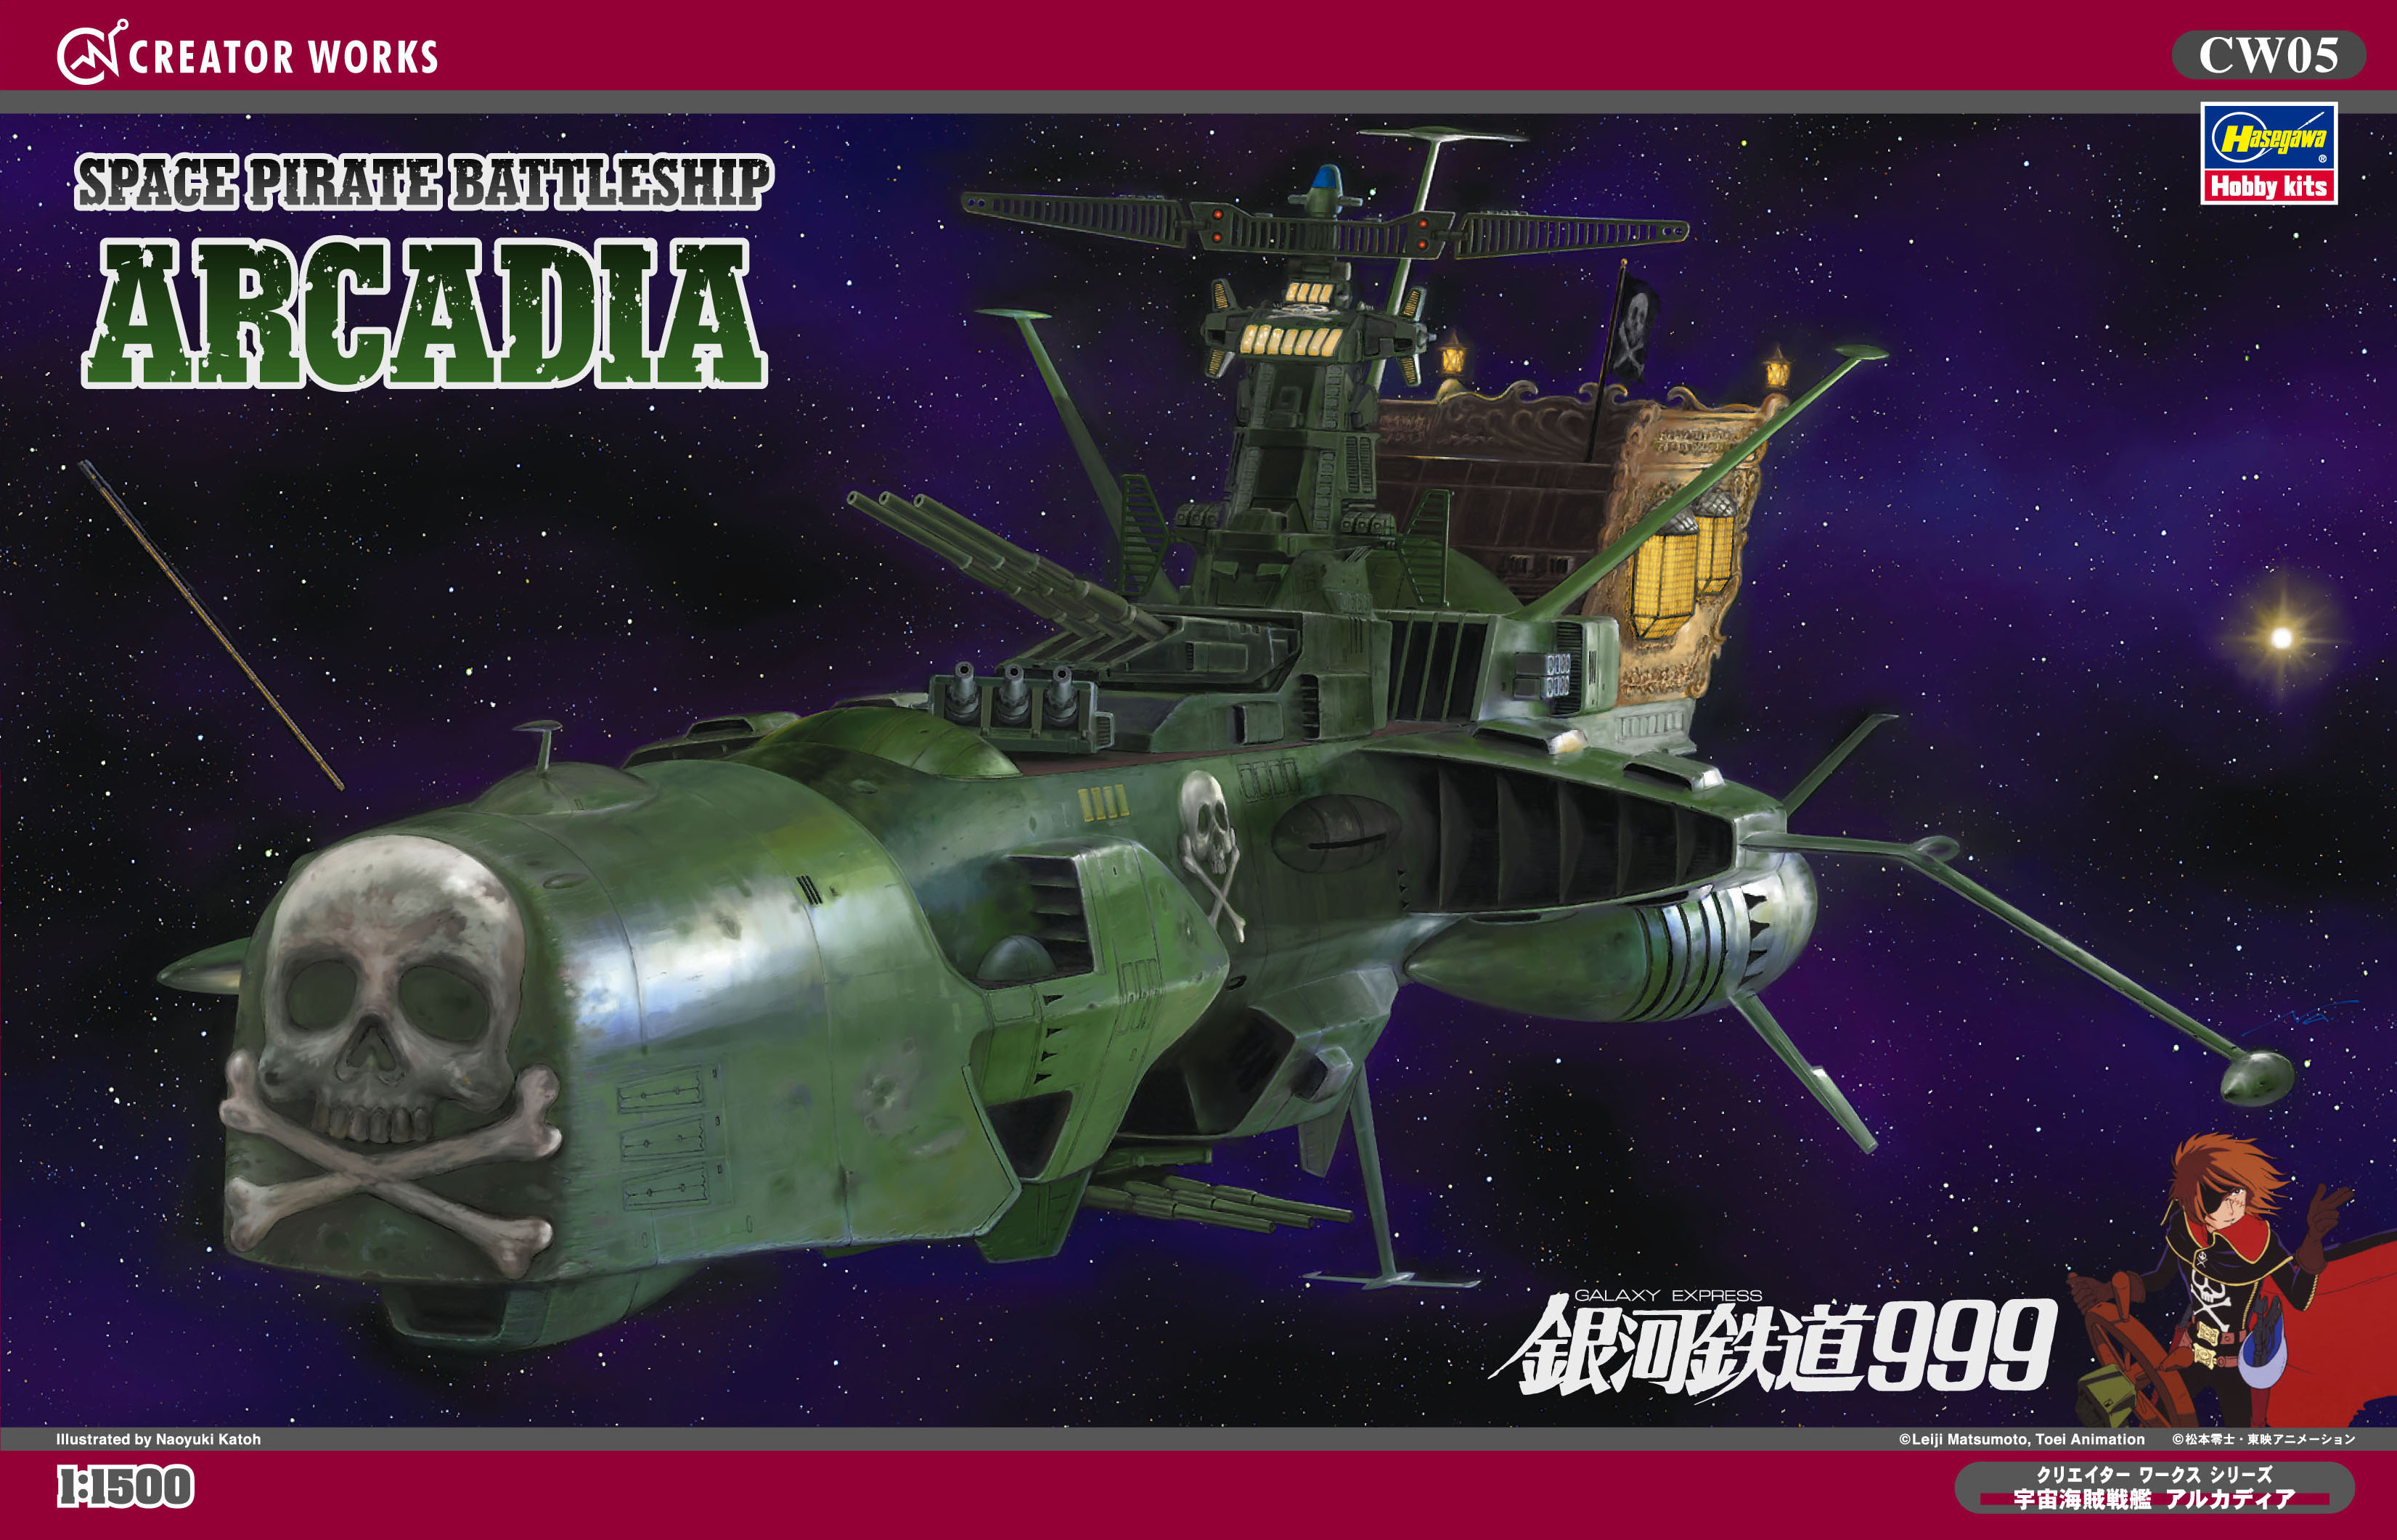 Hasegawa 1/1500: Space Pirate Battleship Arcadia 